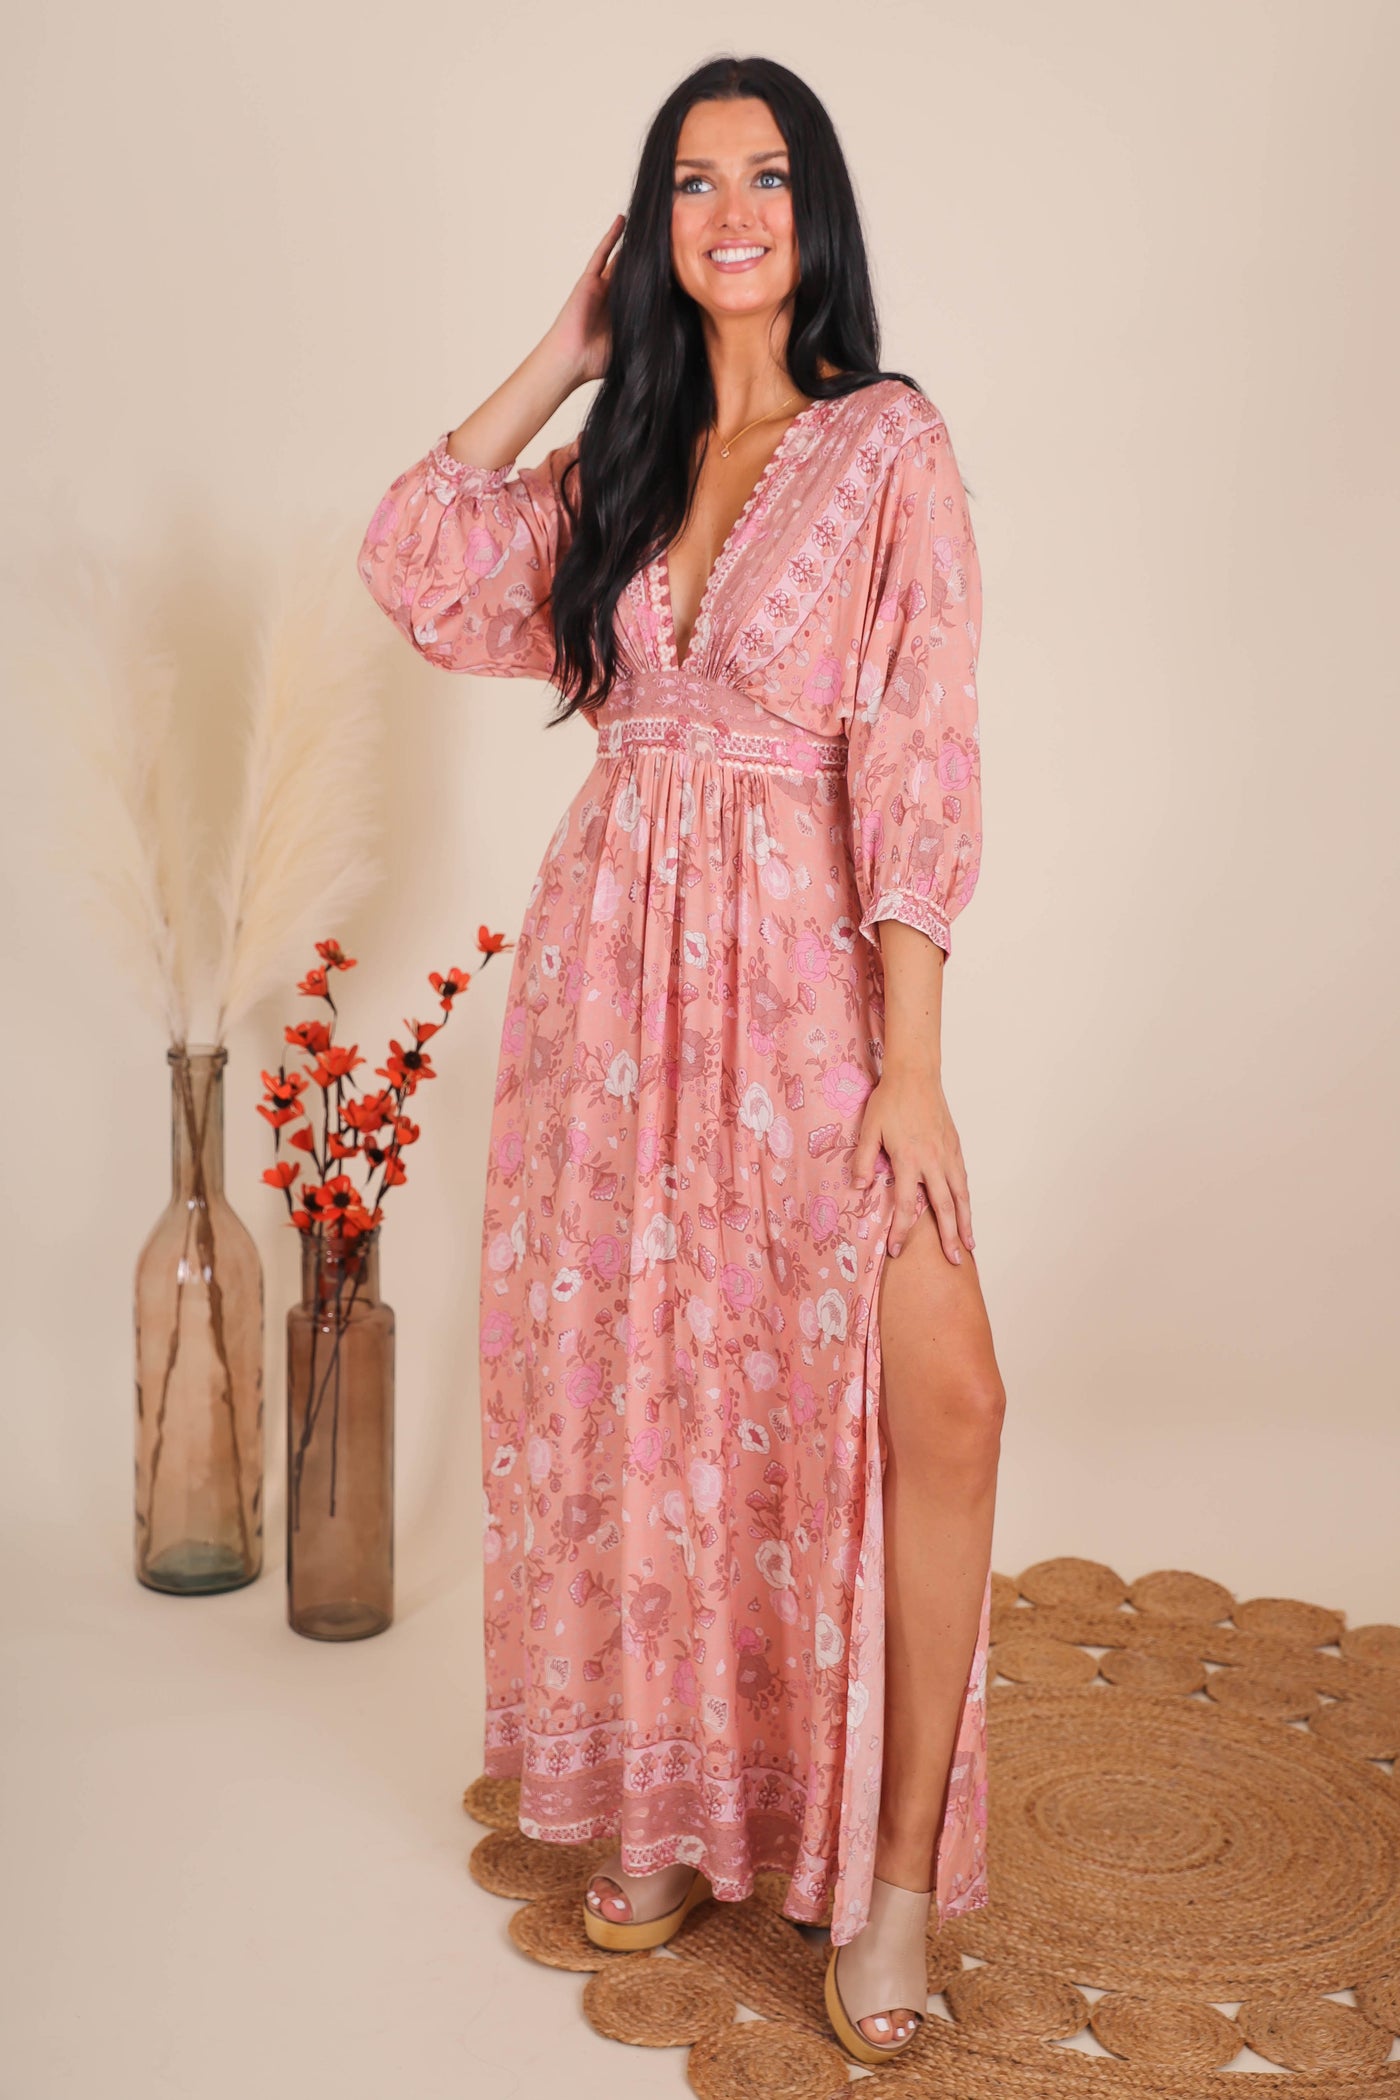 Pink Paisley Maxi Dress- Colorful Vacation Dresses- Aakaa Maxi Dress